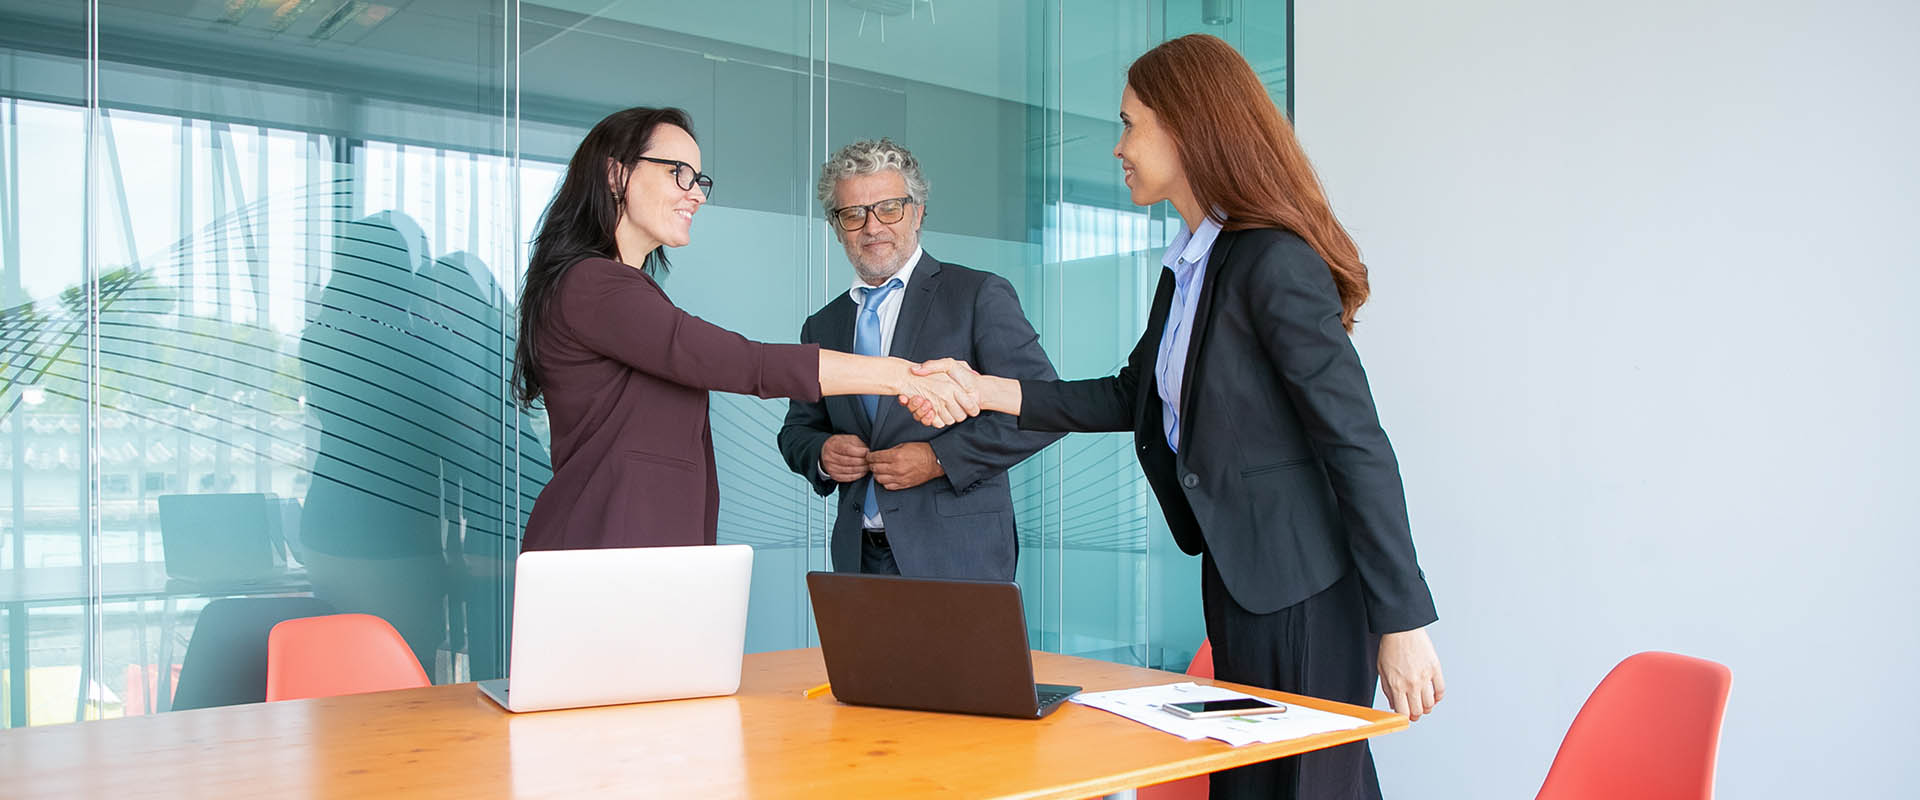 Confident businesswomen handshaking and greeting